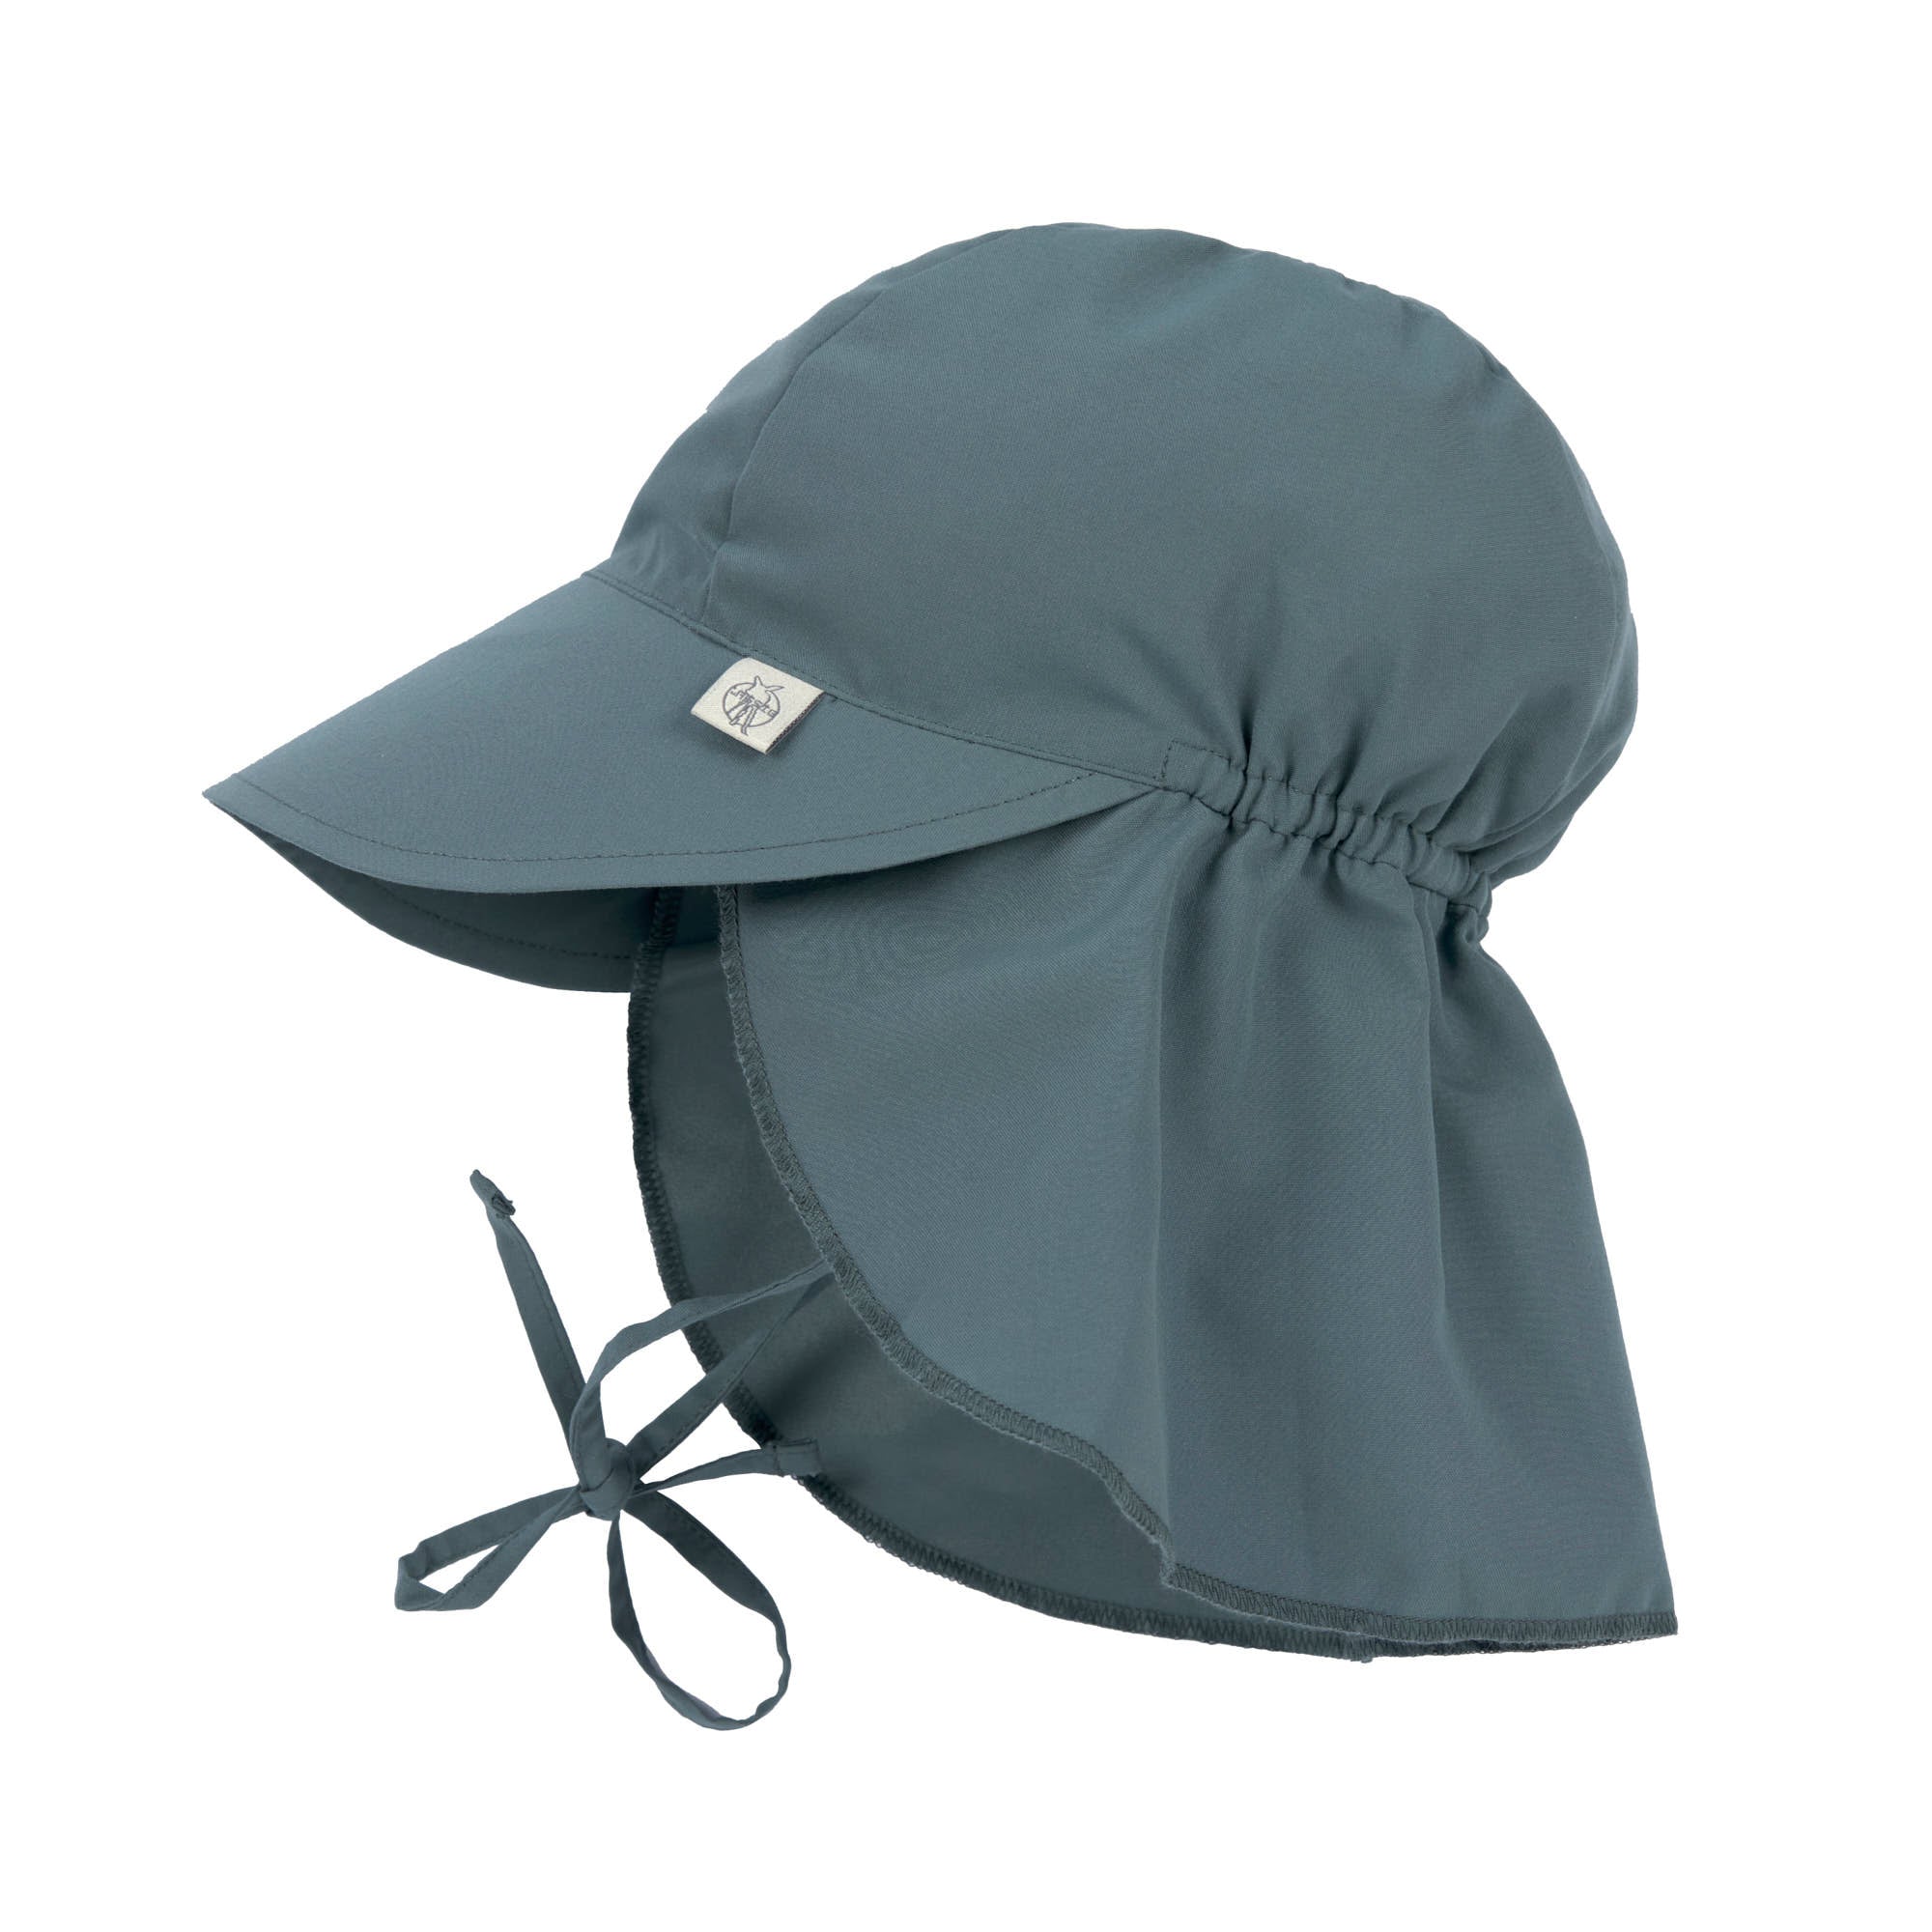 Unisexs LSF Sun Protection Flap Hat blue van  in de kleur Blue in maat 50-51.